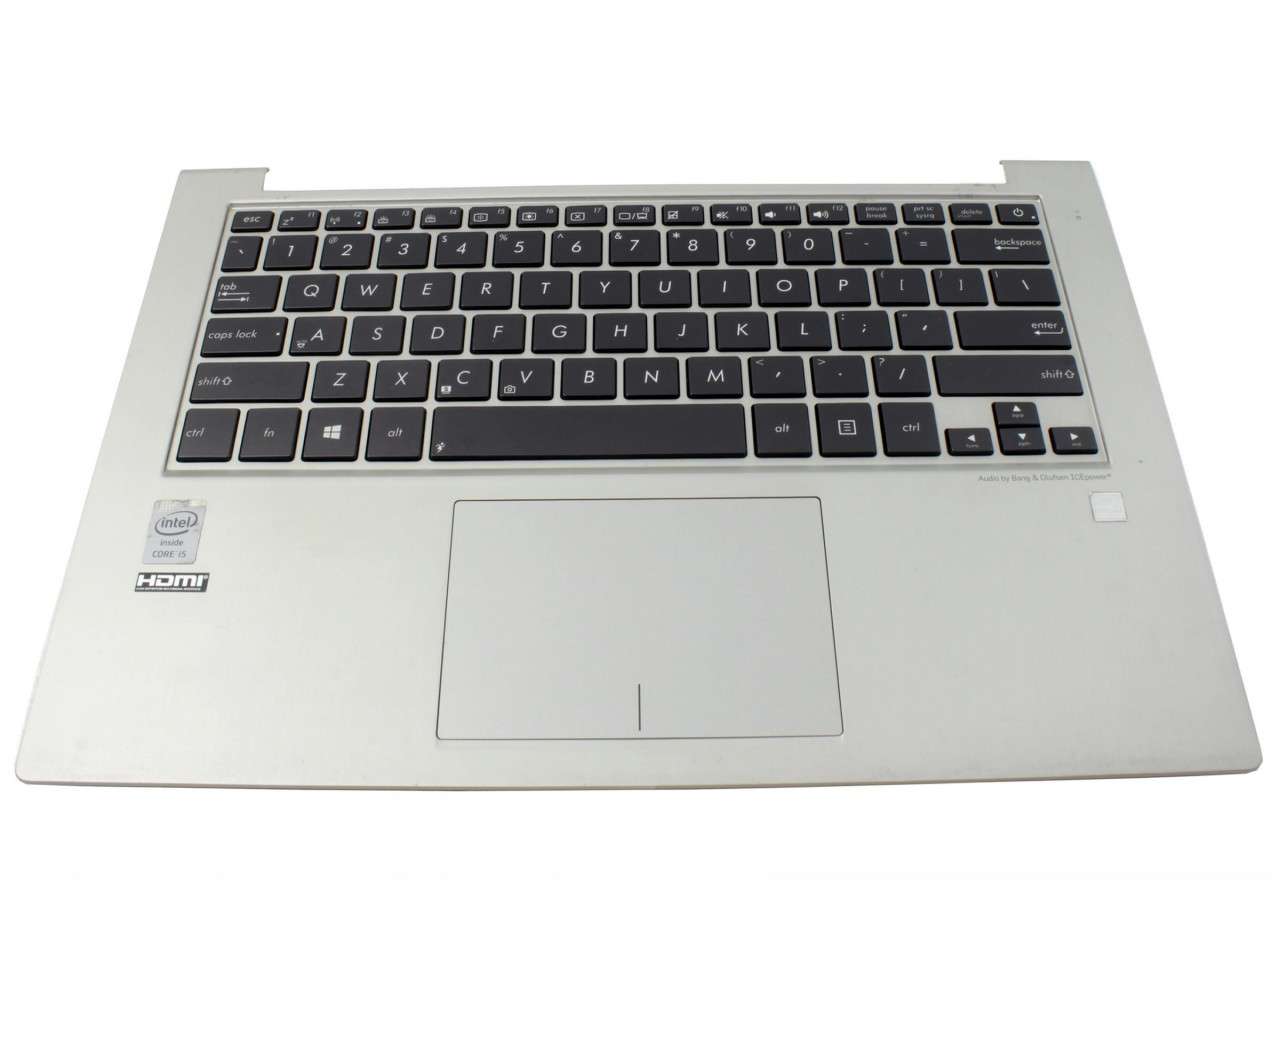 Tastatura Asus 9Z.N8JBU.601 neagra cu Palmrest argintiu si Touchpad (Neagra) imagine 2022